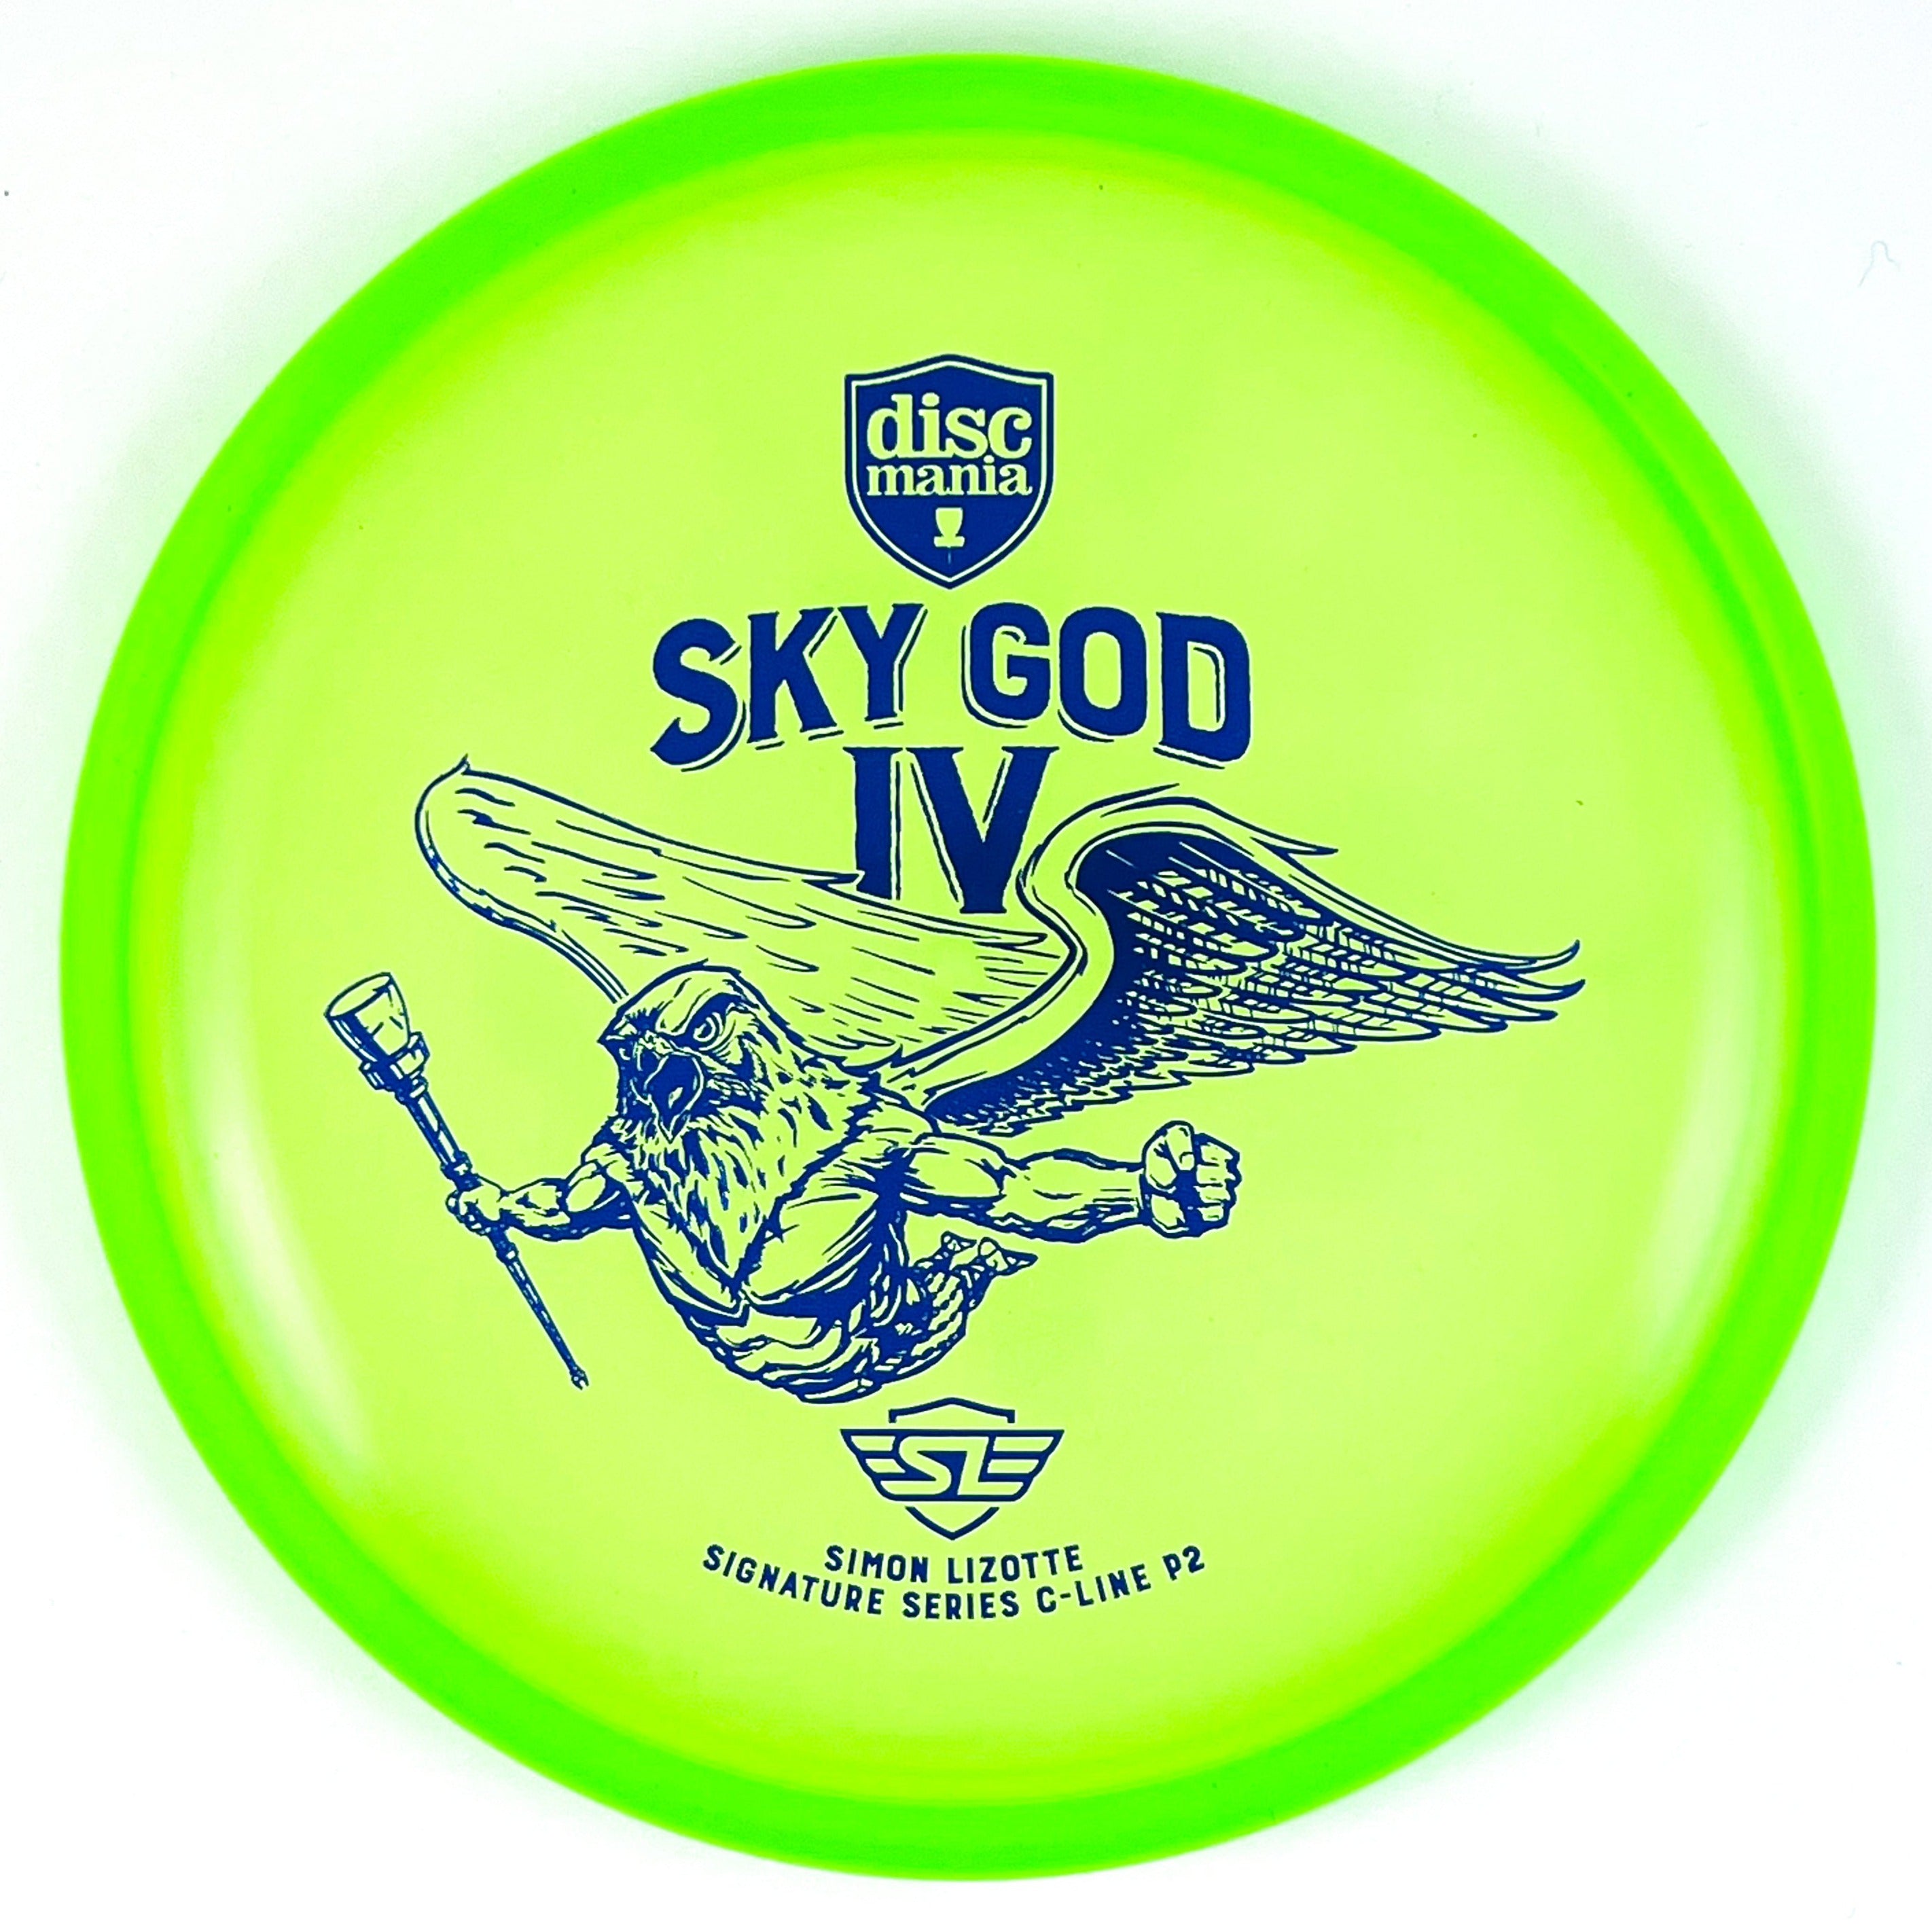 Green Simon Lizotte Signature Series Sky God 4, C-Line P2 disc golf putter disc by Discmania.